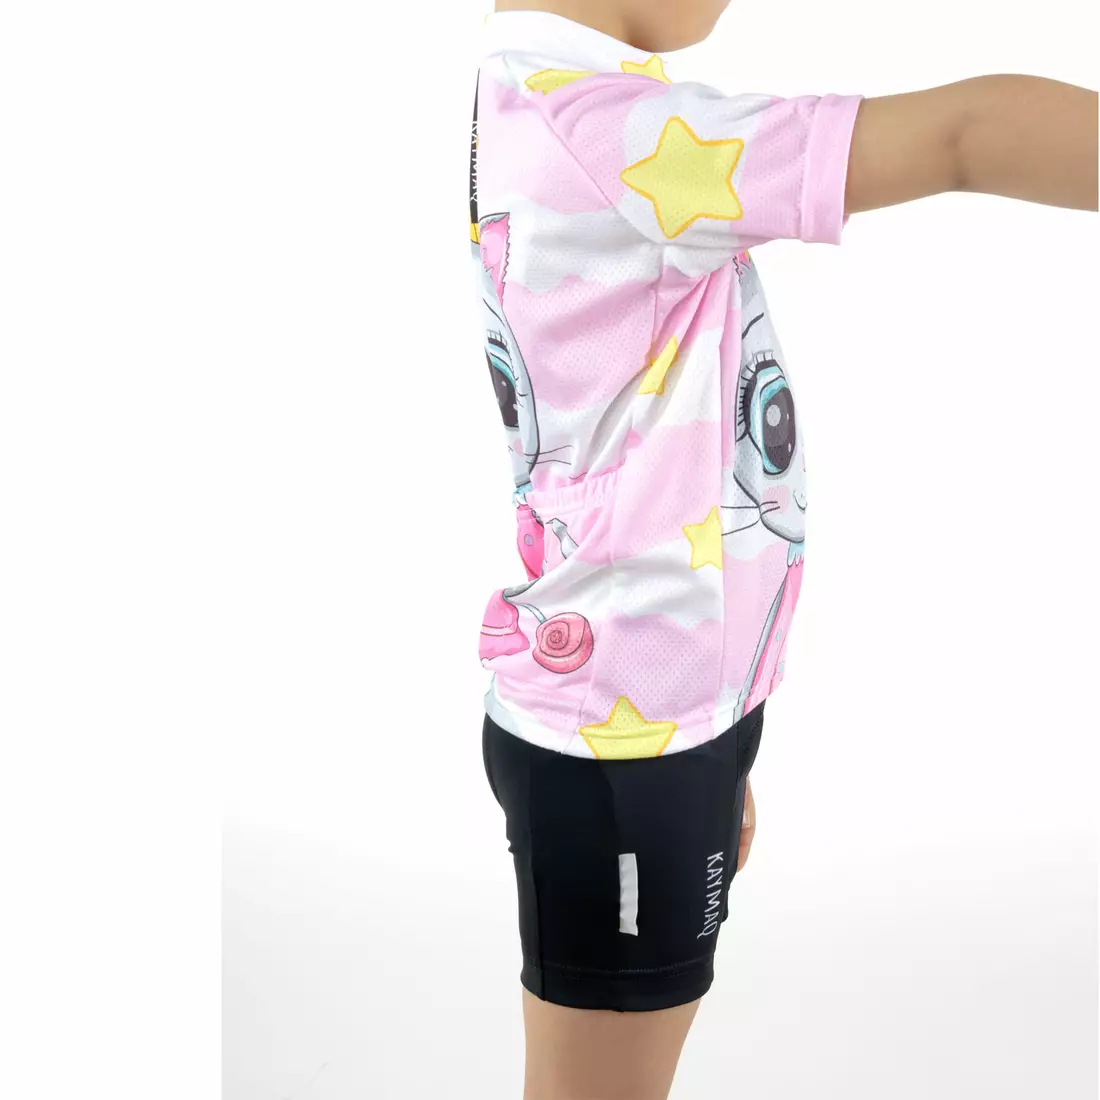 KAYMAQ DESIGN J-G3 detský cyklistický dres